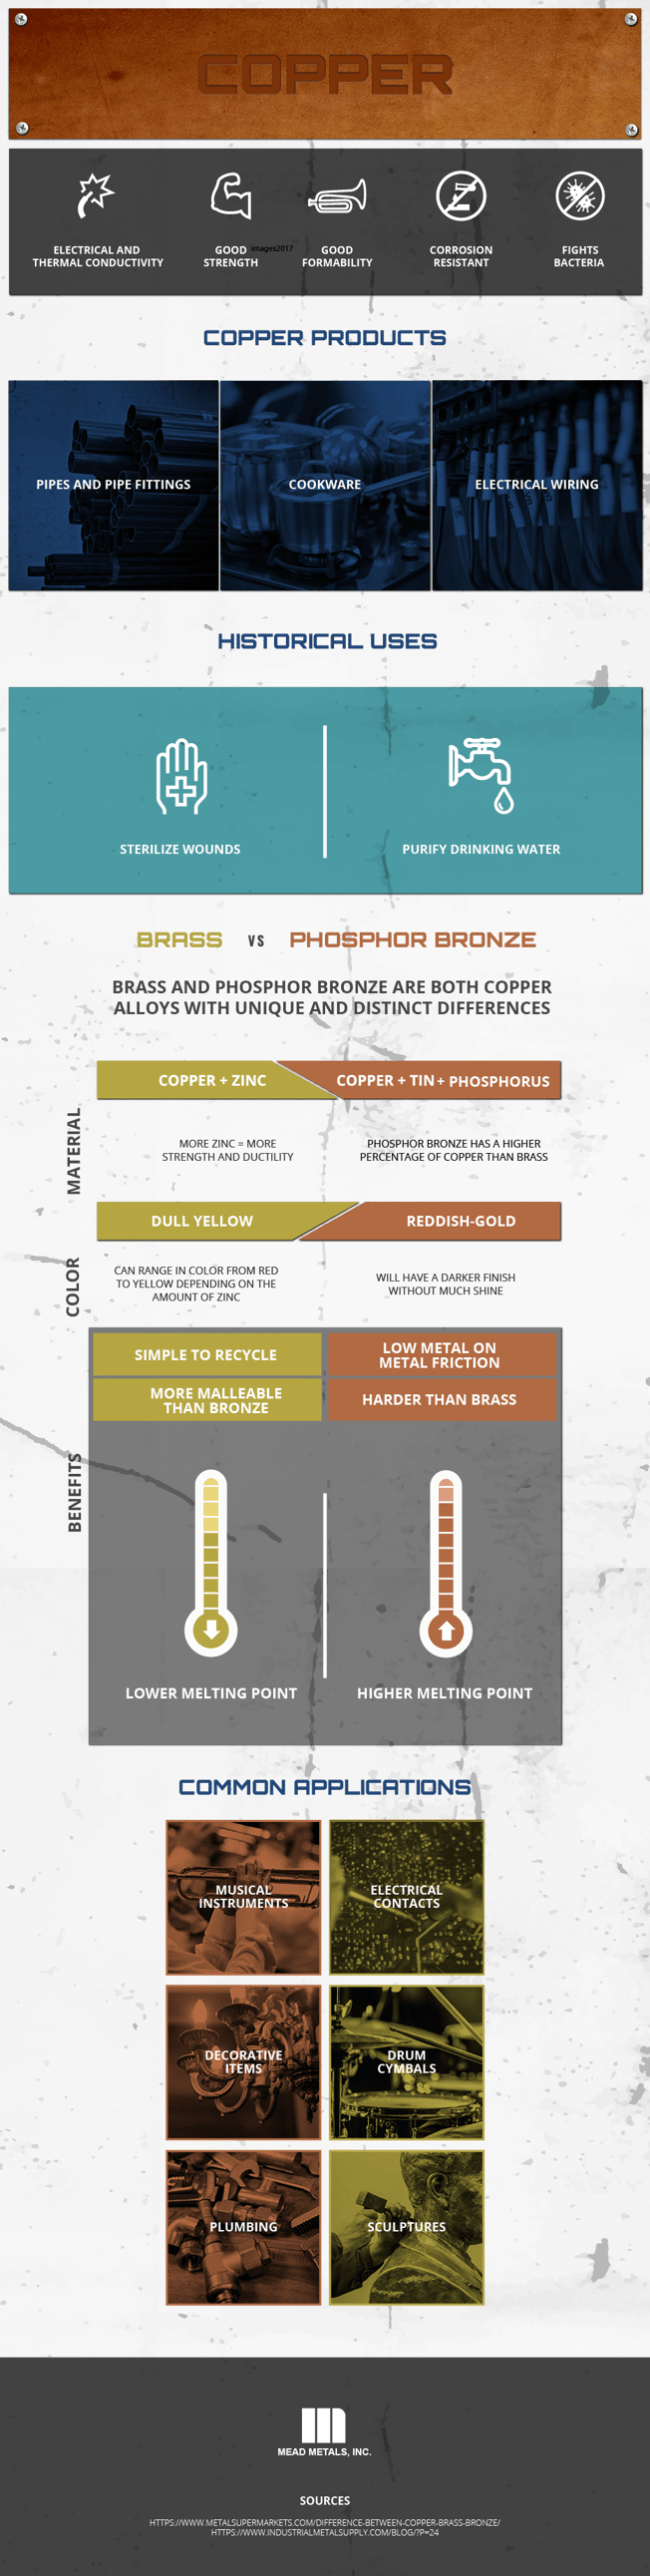 Copper: Brass vs Phosphor Bronze Infographic